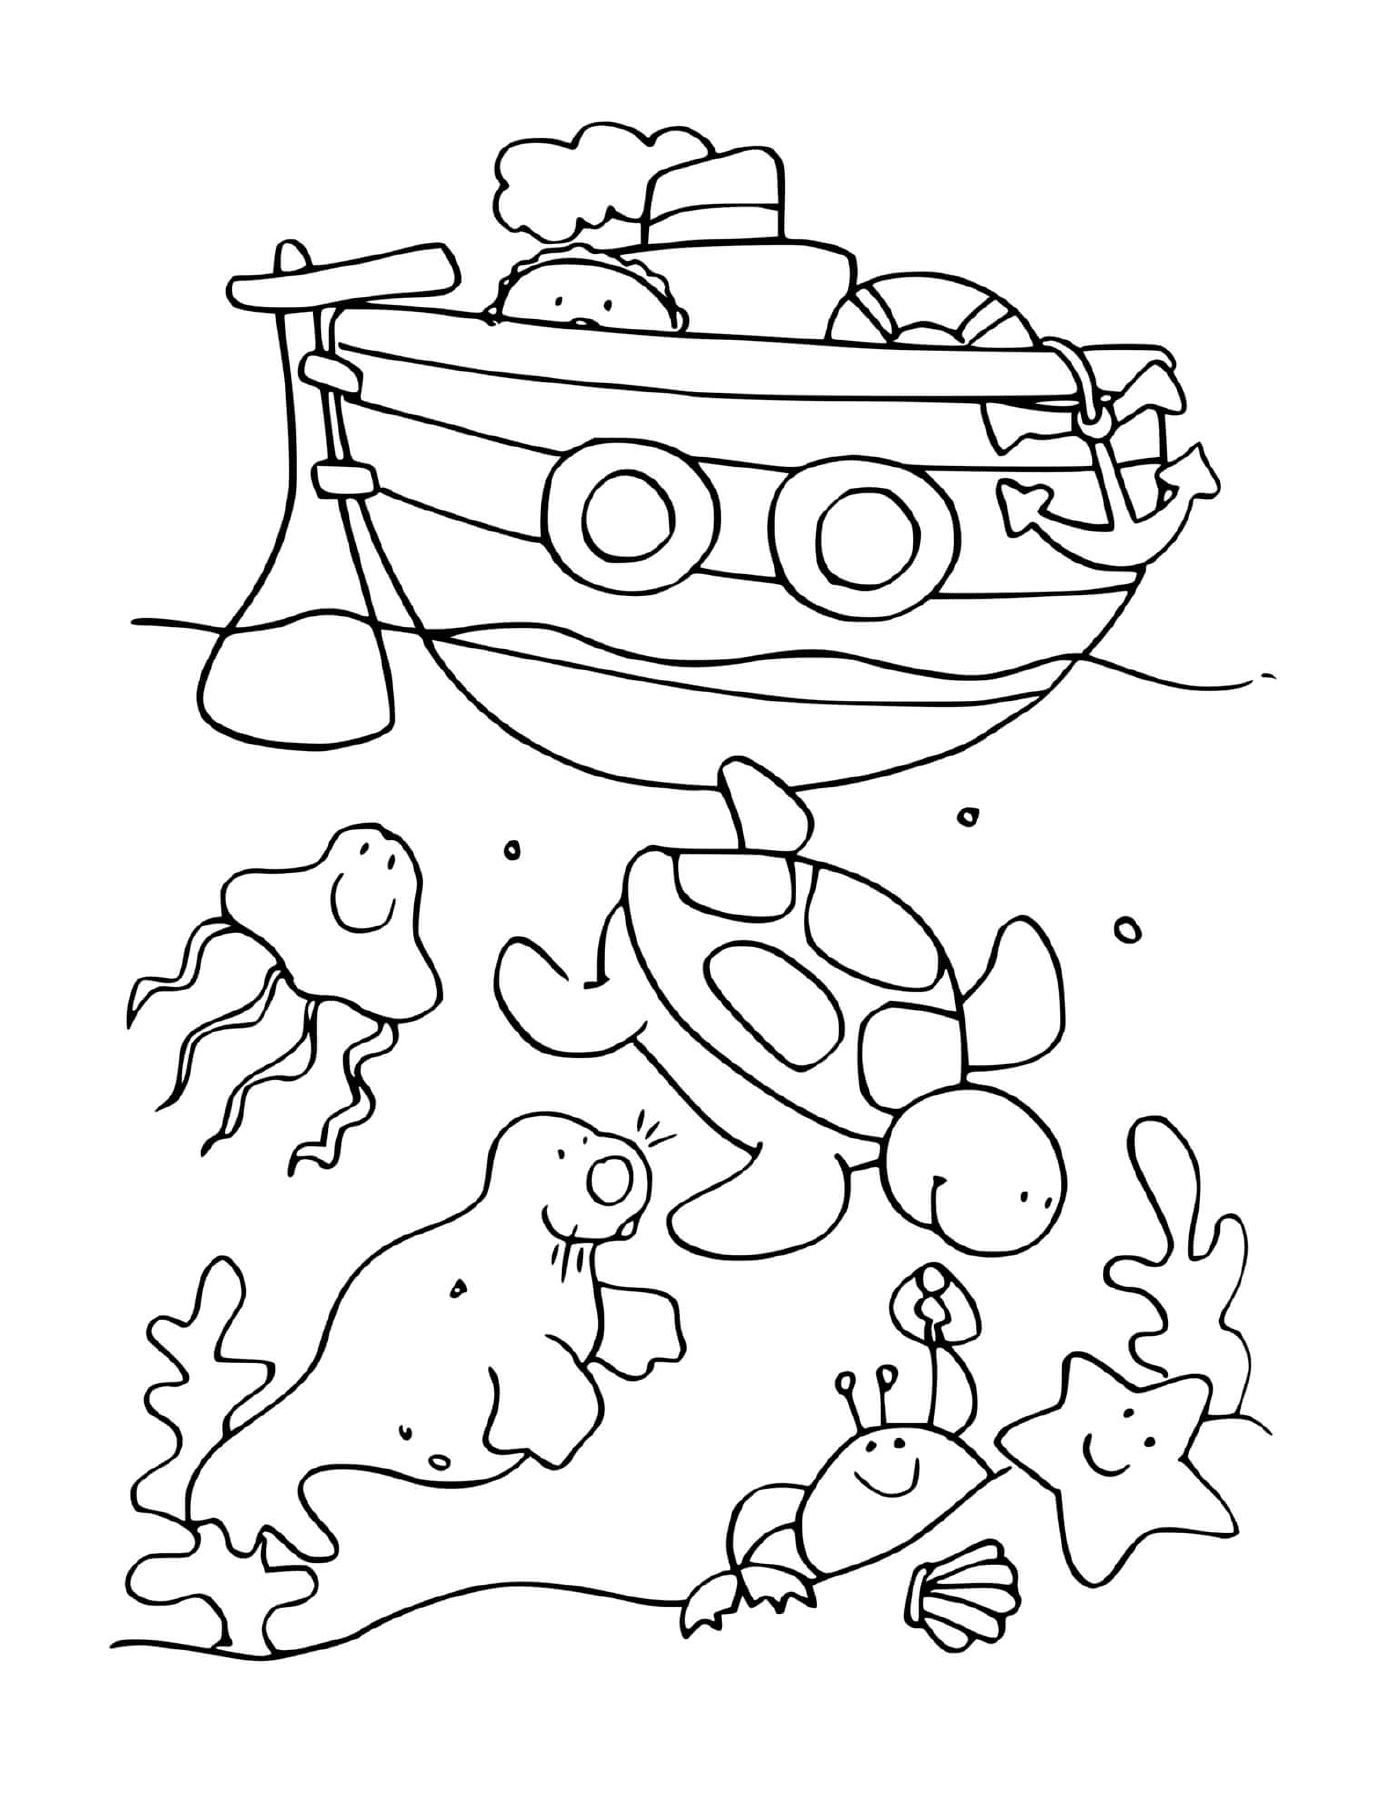  Vessel and marine animals 